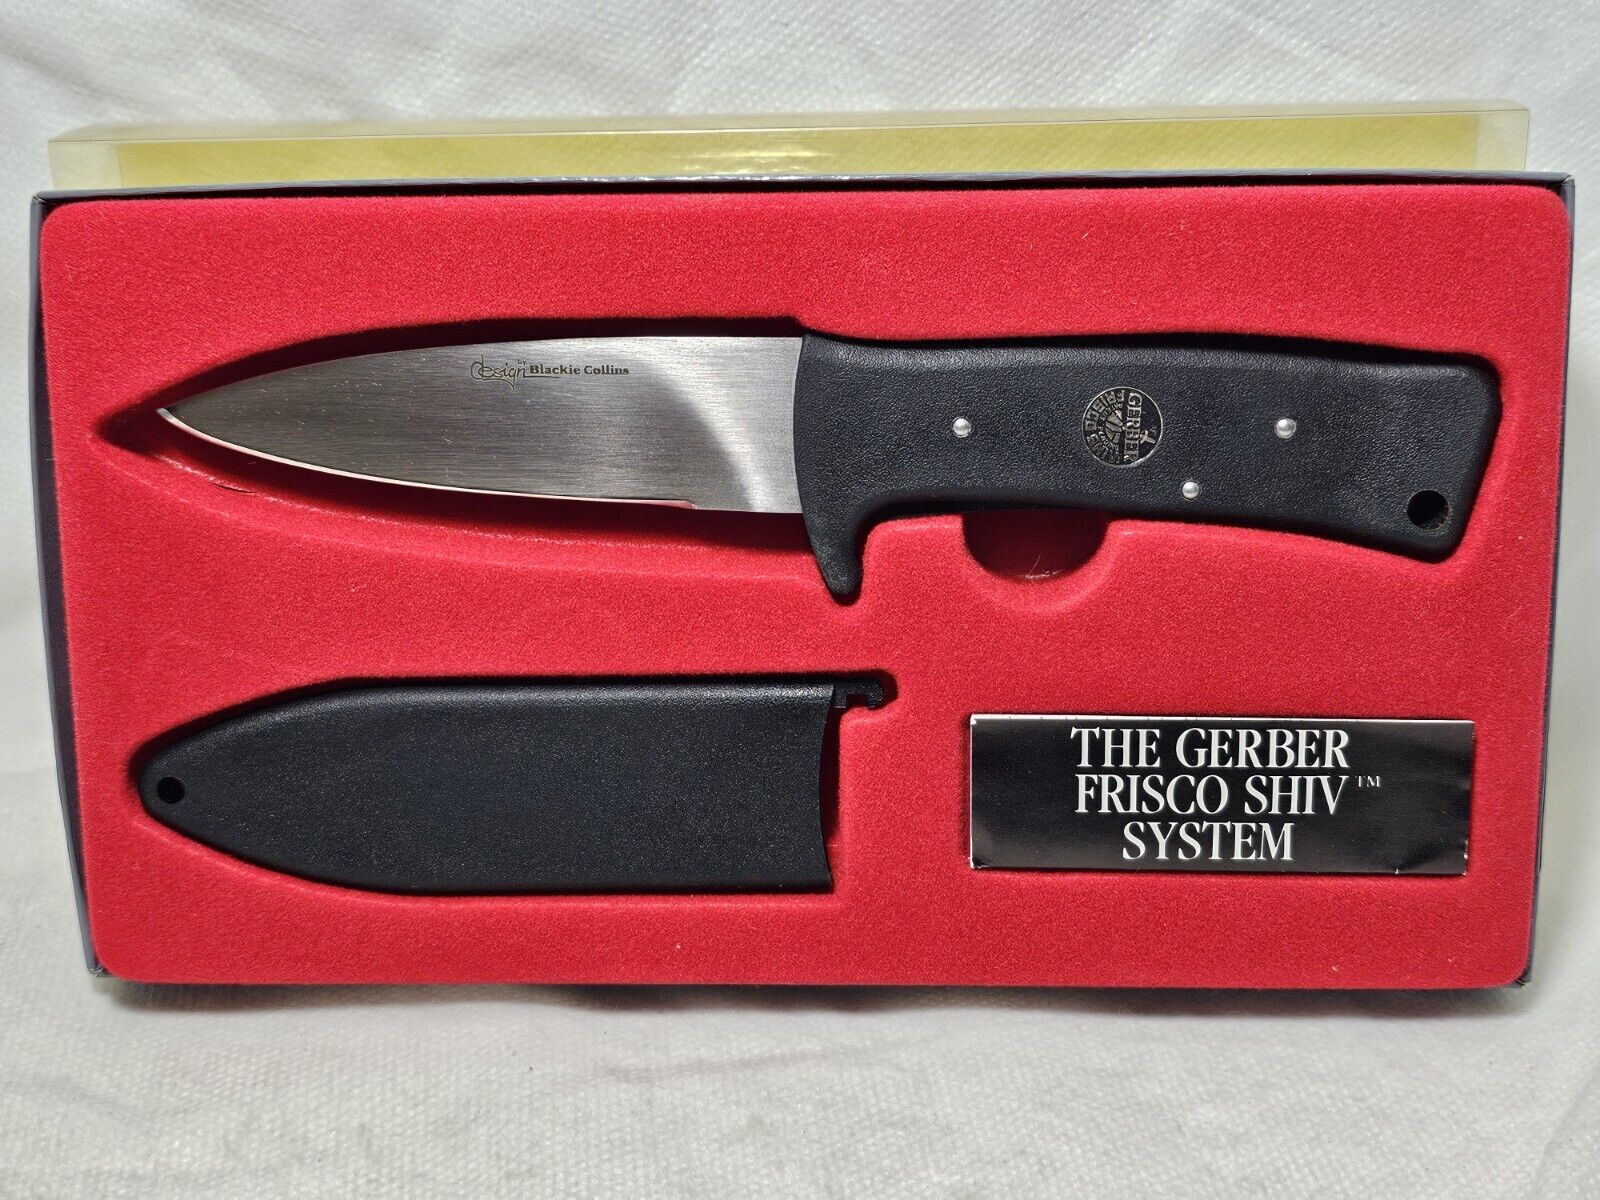 Gerber USA Blackie Collins 5561 Frisco Shiv Single Edge Survival Blade Knife